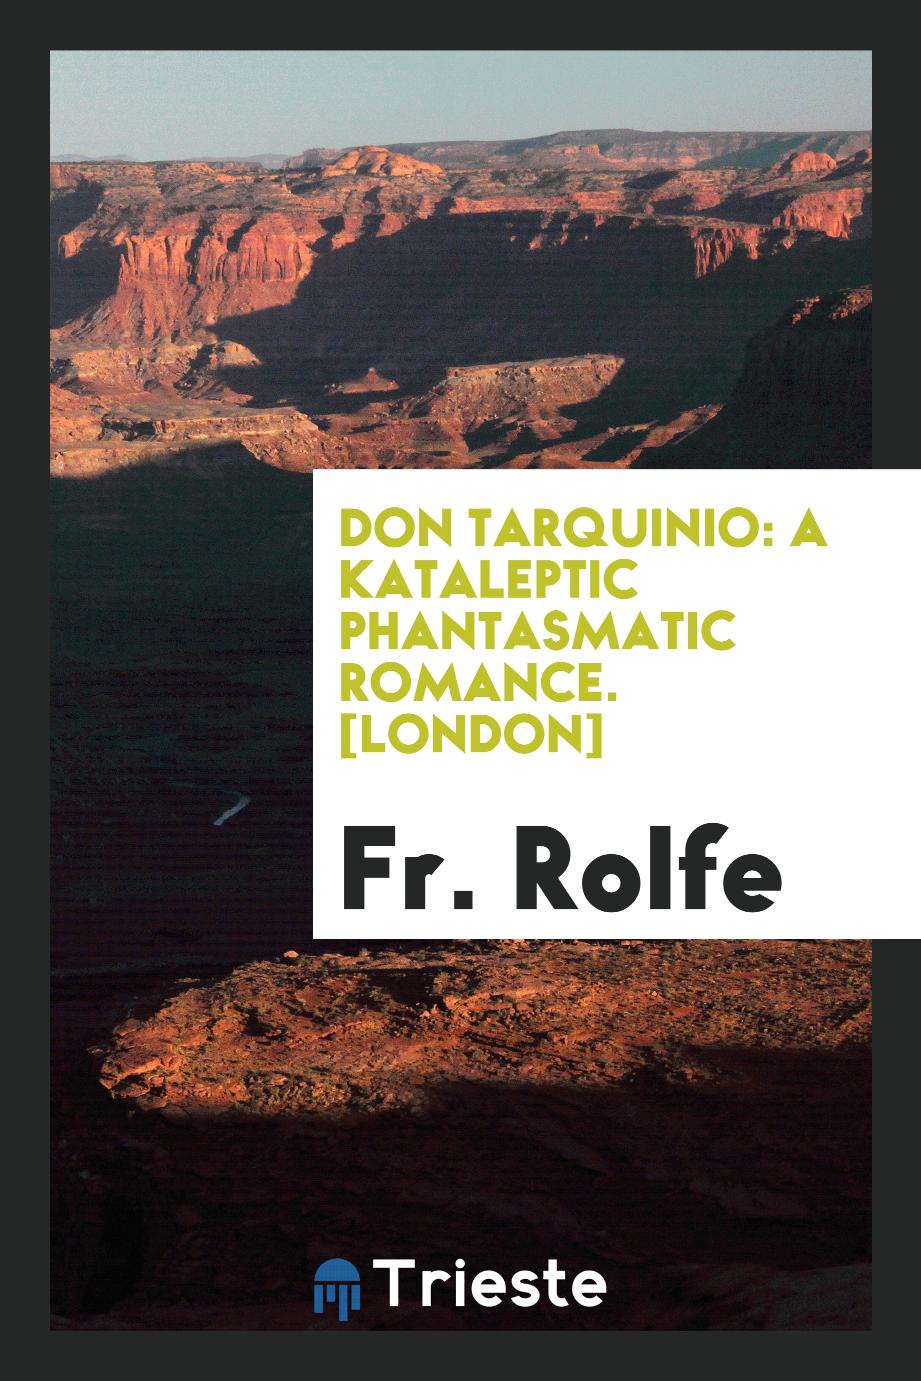 Don Tarquinio: A Kataleptic Phantasmatic Romance. [London]